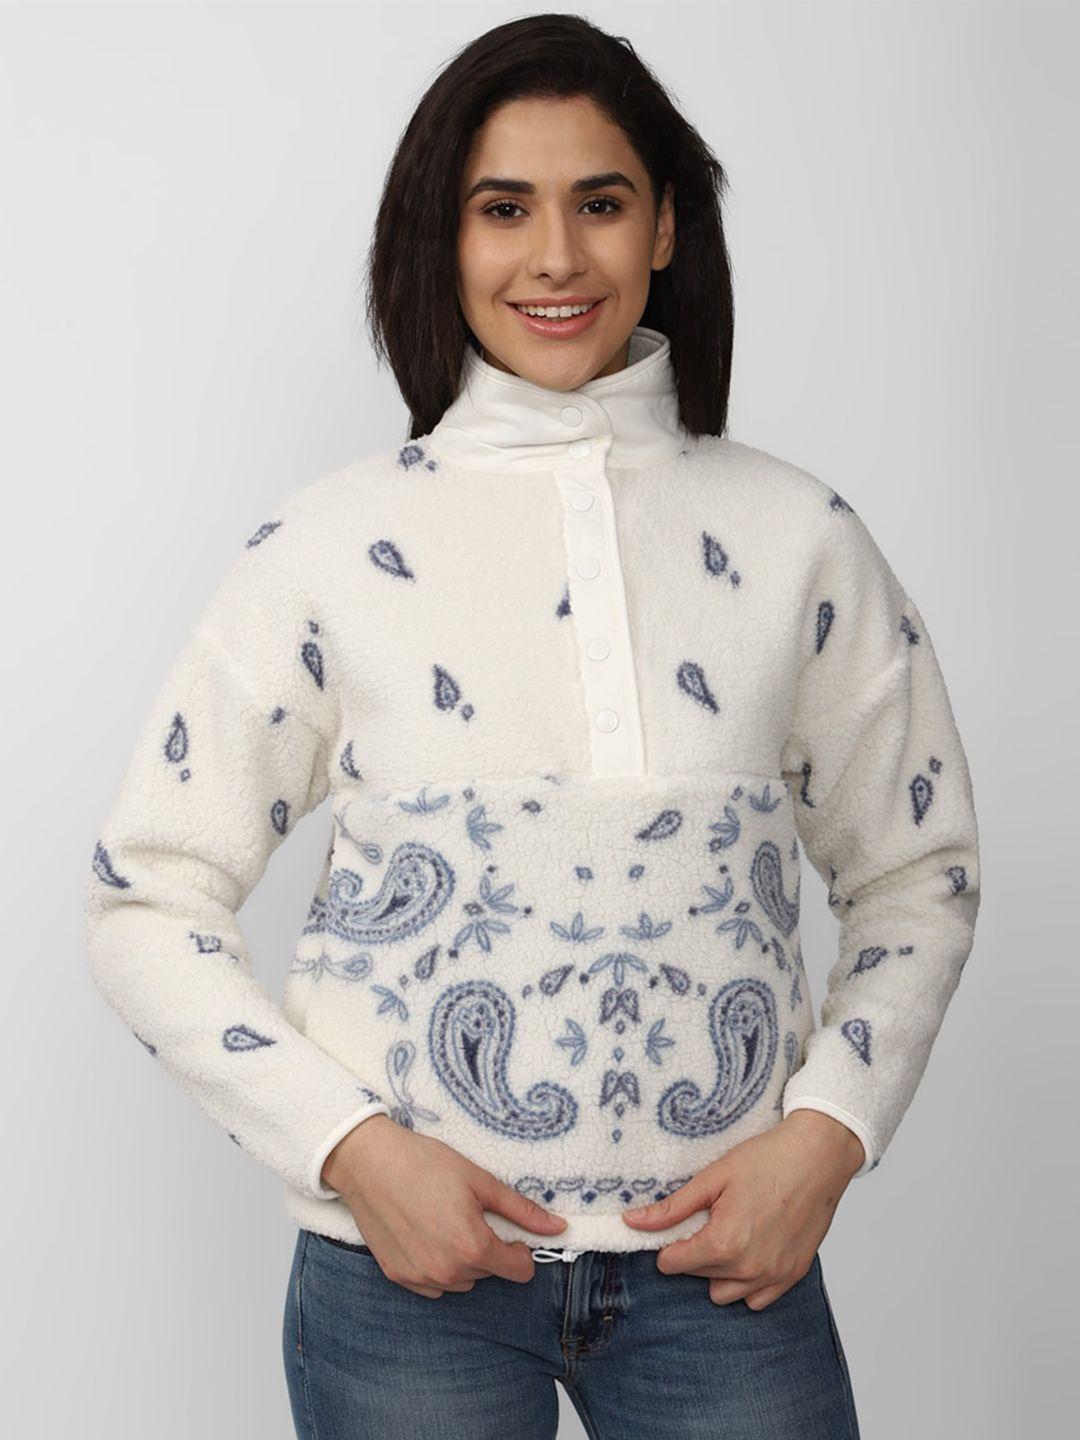 american eagle outfitters women printed sweatshirt